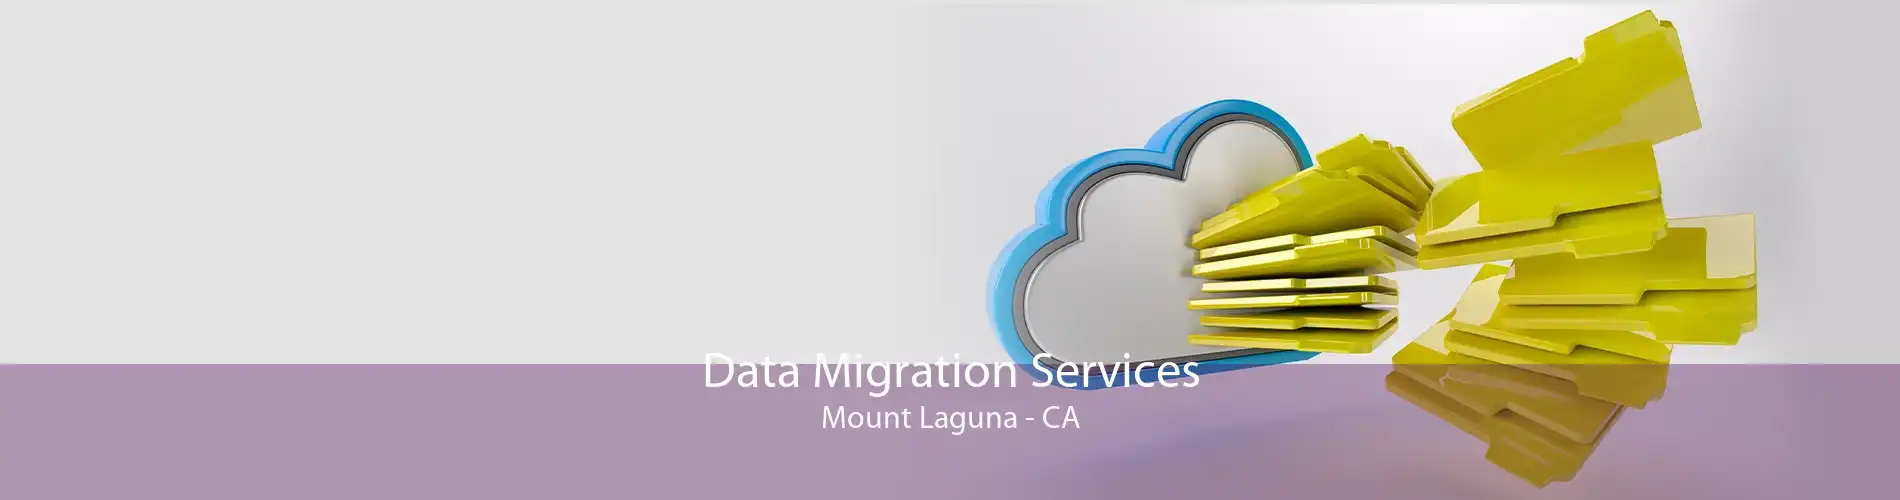 Data Migration Services Mount Laguna - CA